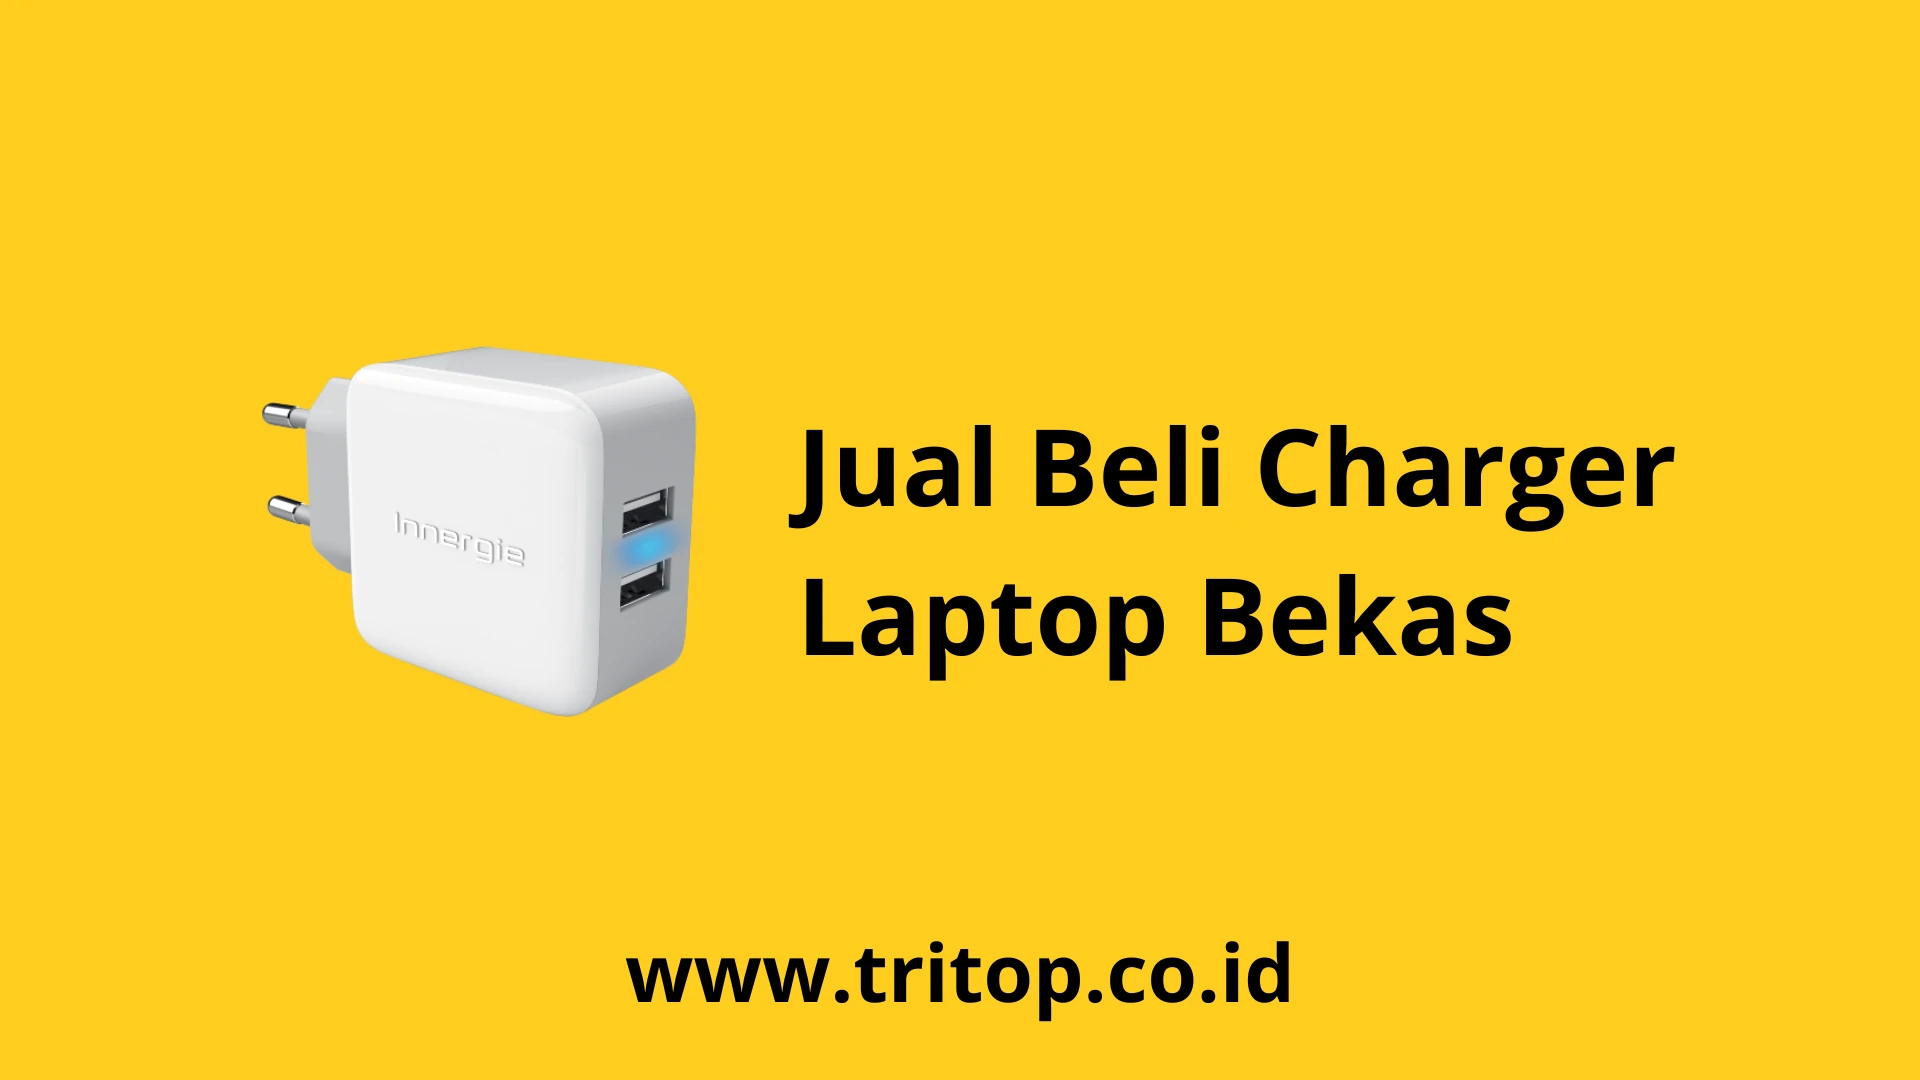 Jual Beli Charger Laptop Bekas www.tritop.co.id